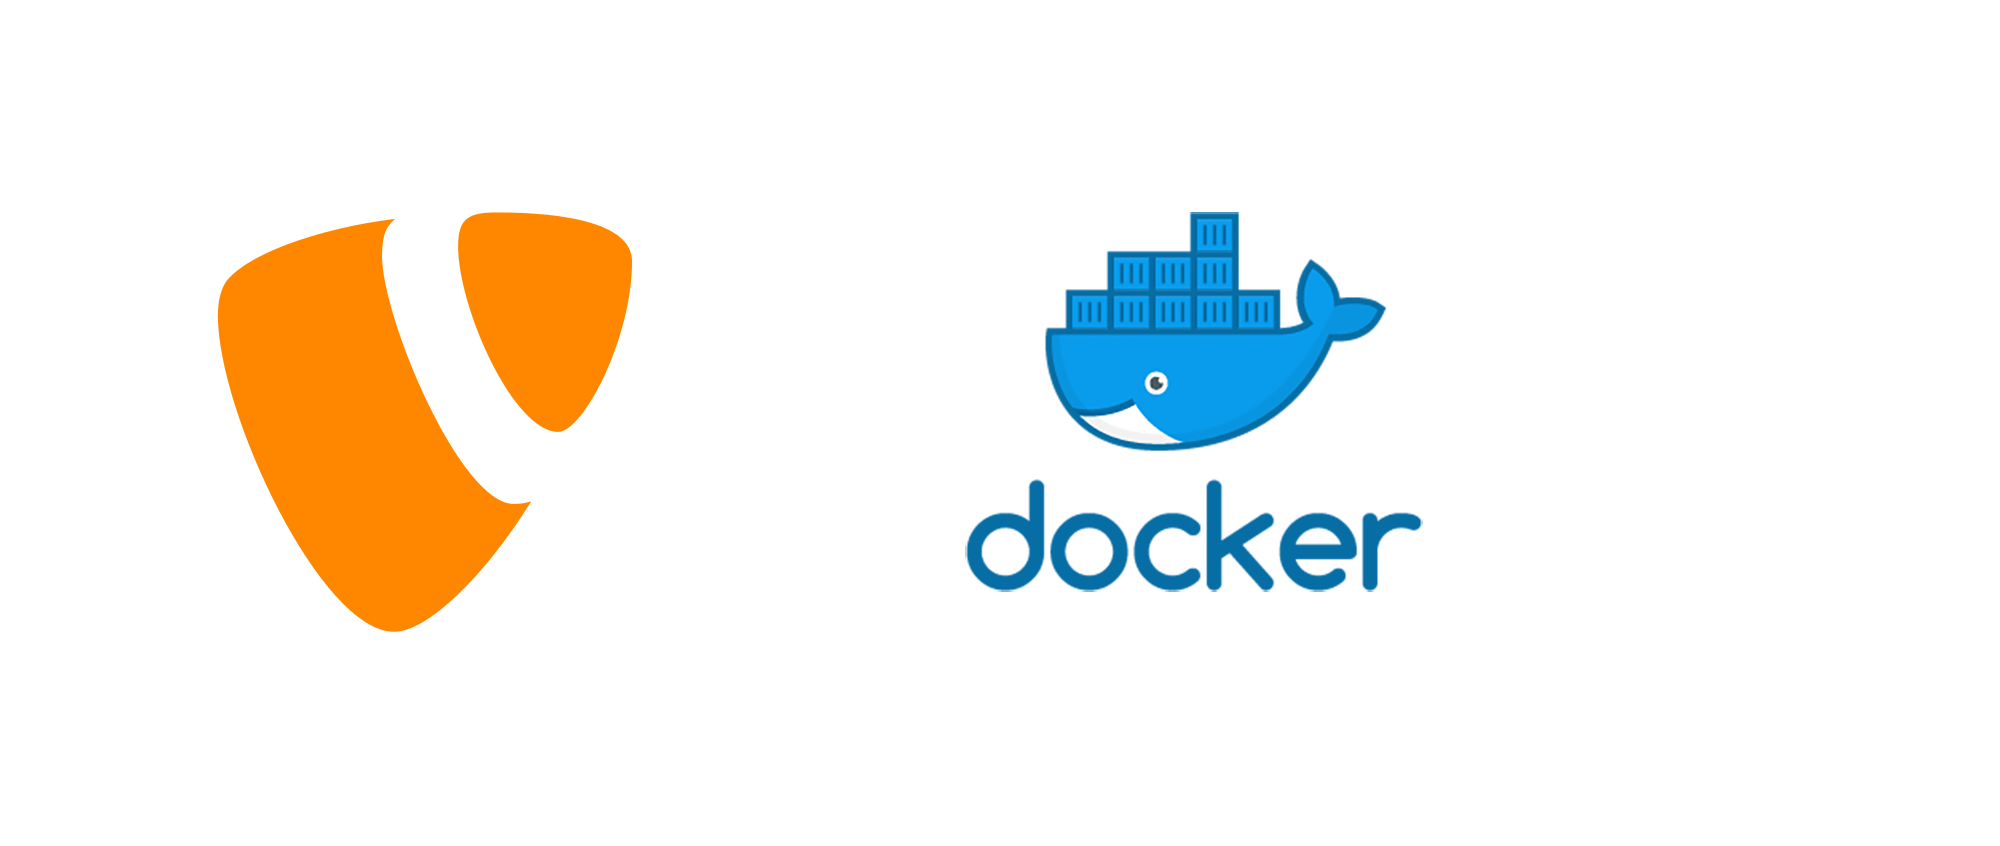 Docker exec user. Докер Let it doc.